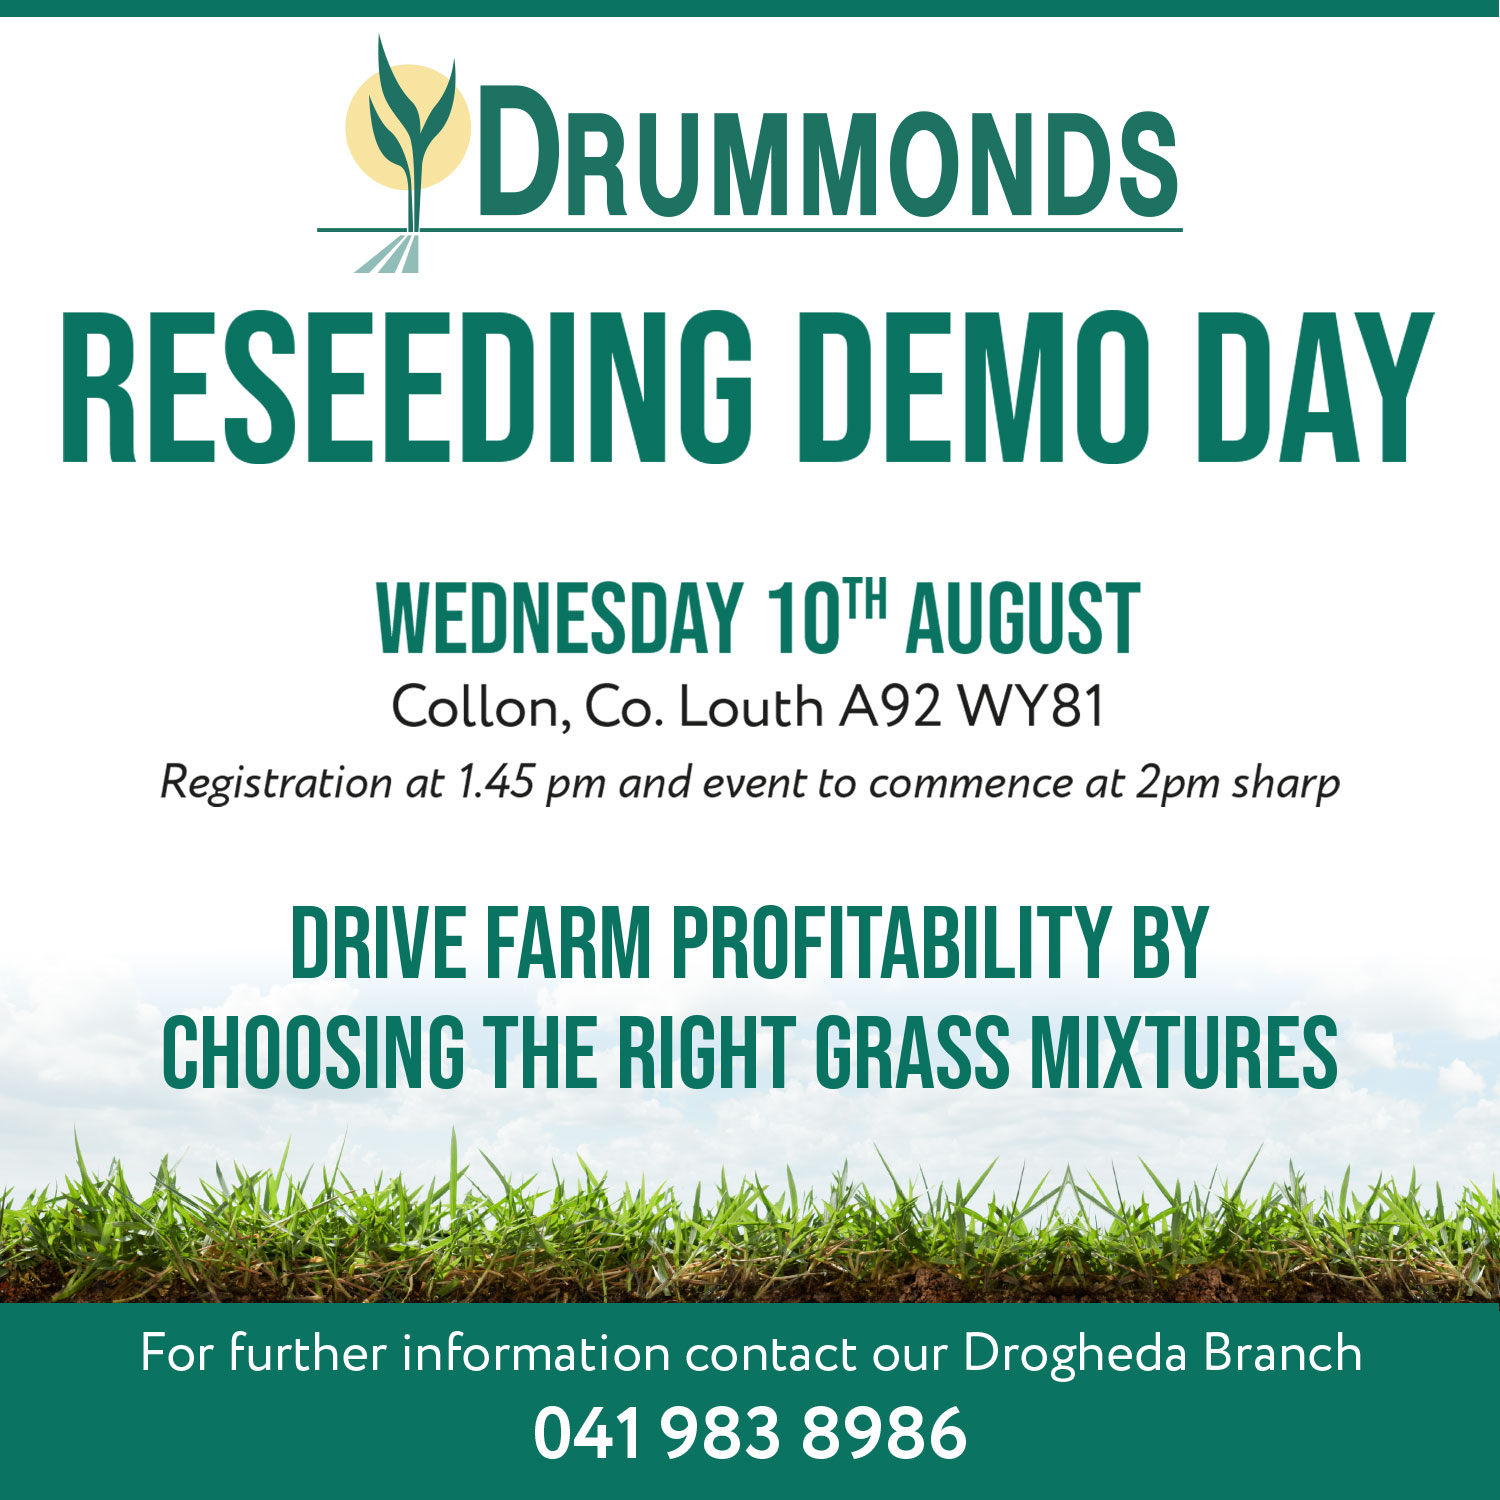 Drummonds Reseeding Demo Day